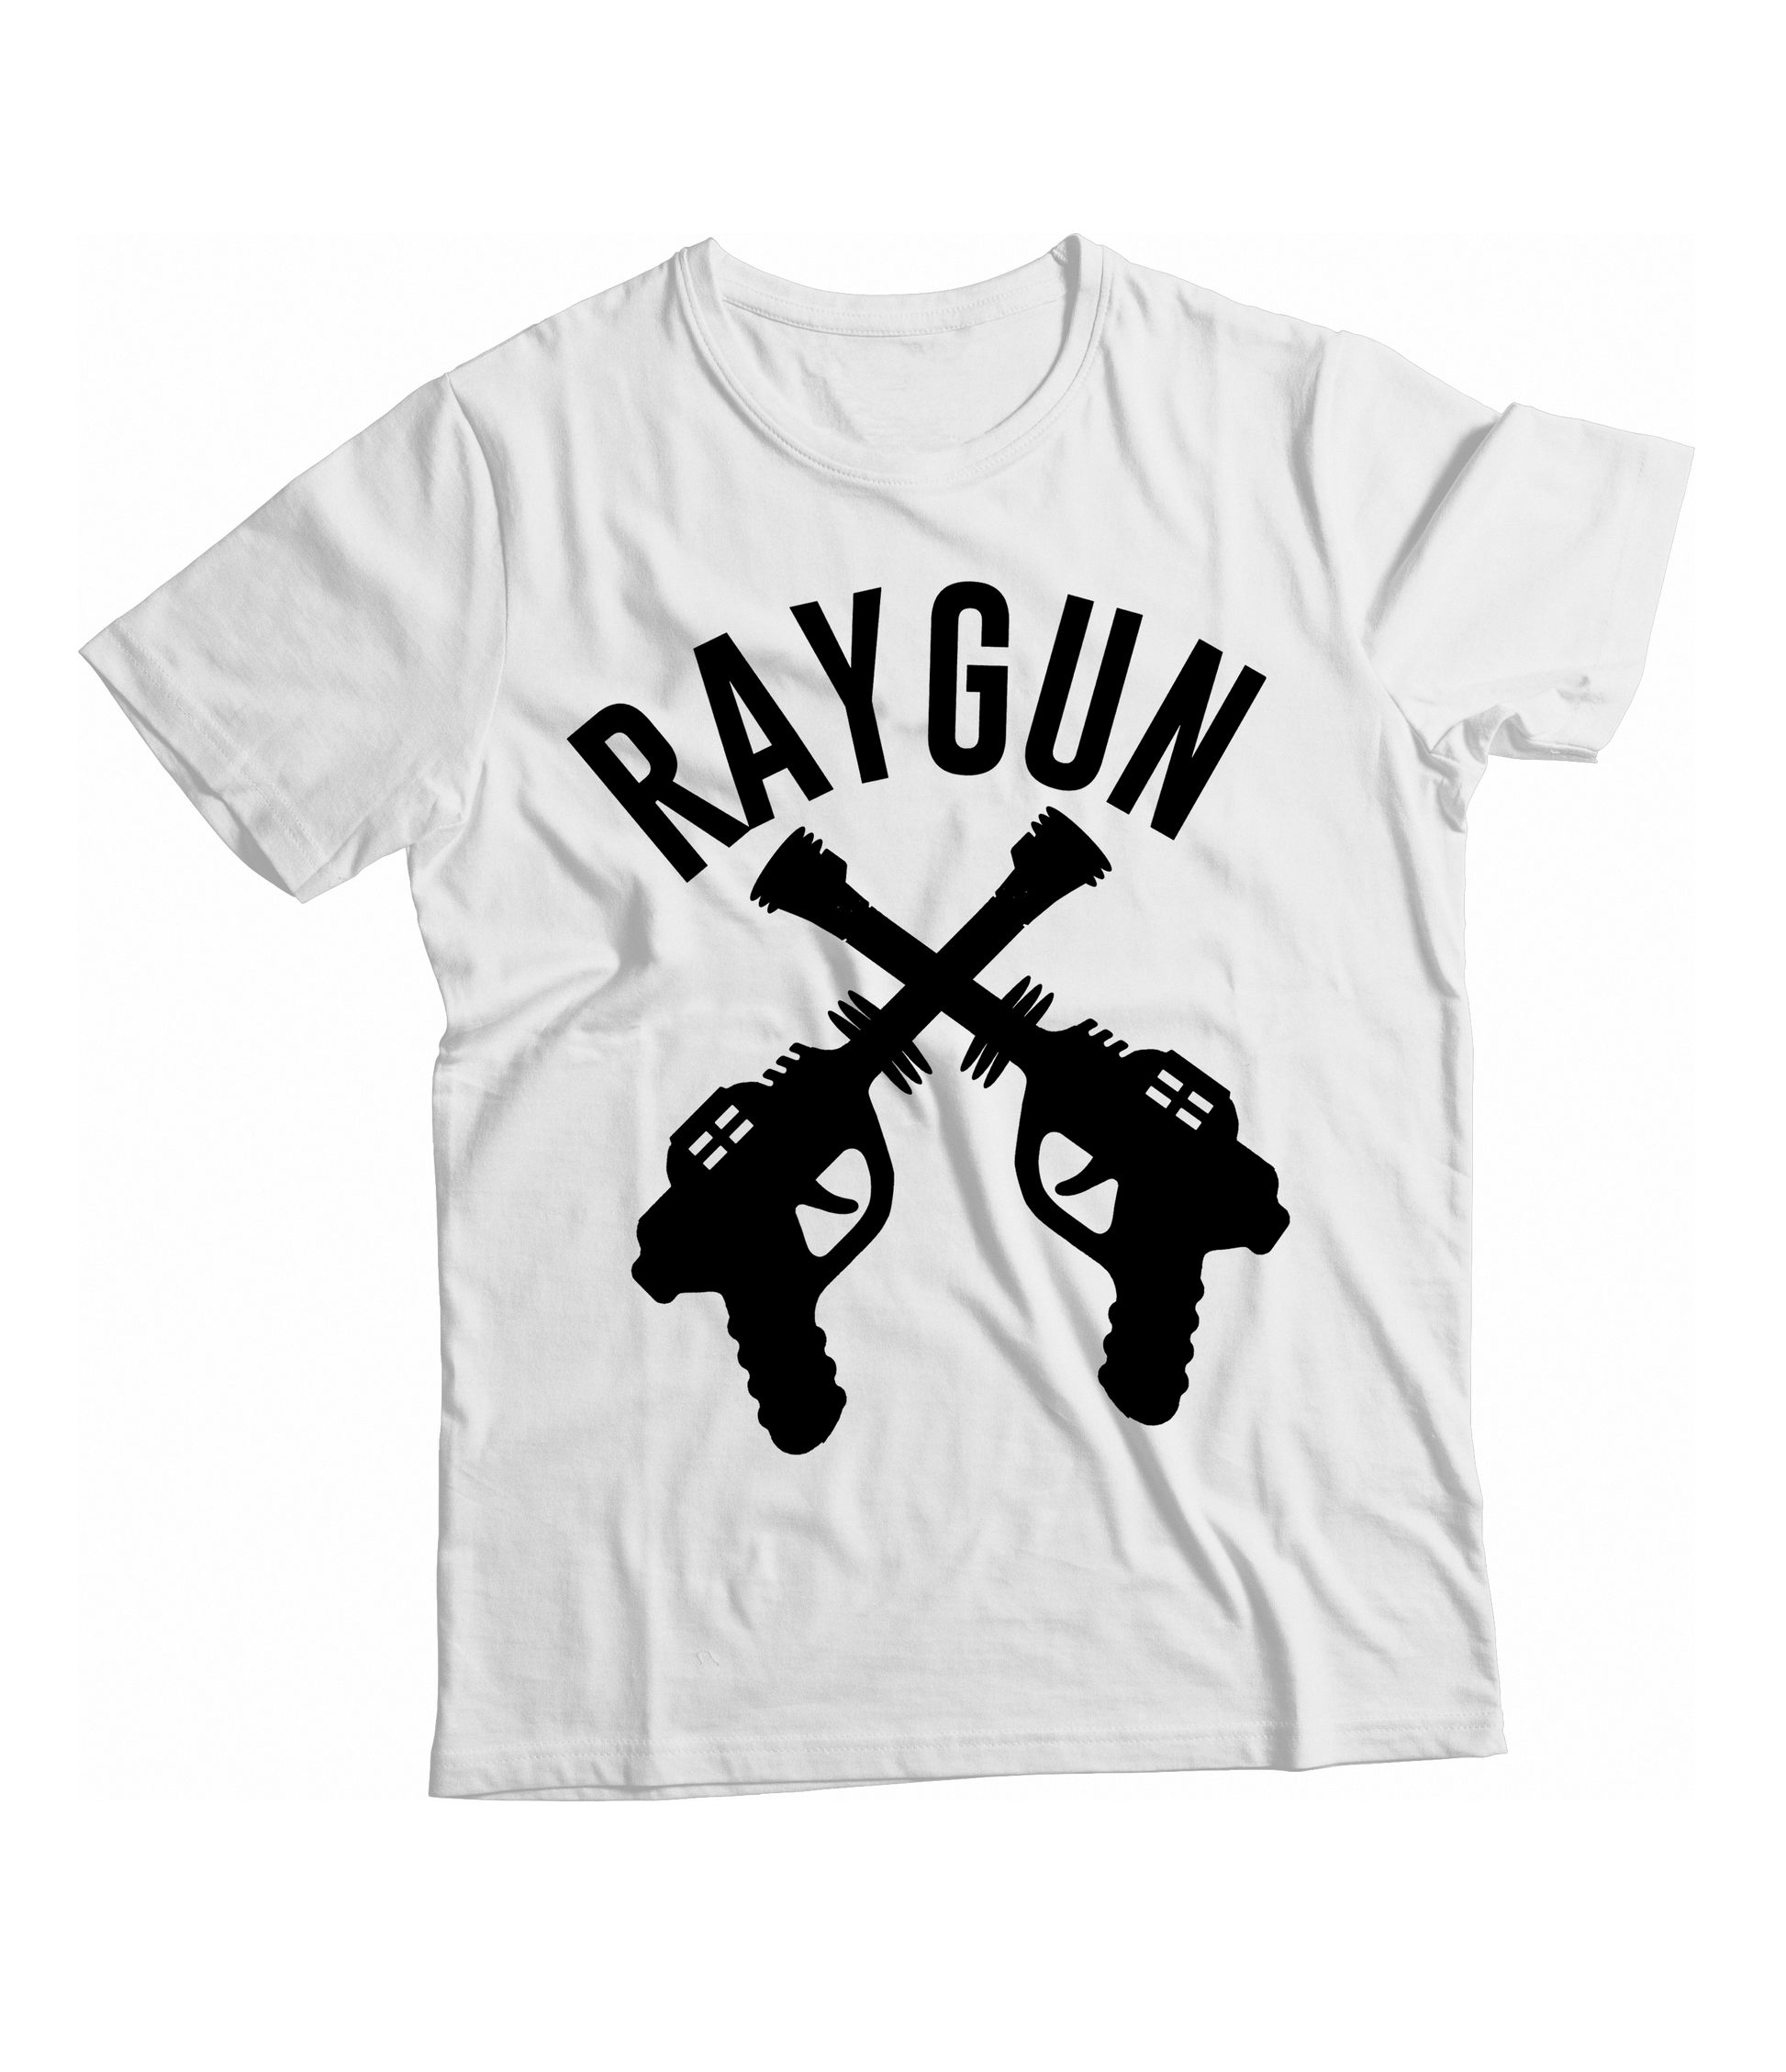 Raygun Classic Double Guns Vintage Heather Blend T-Shirt Tshirts